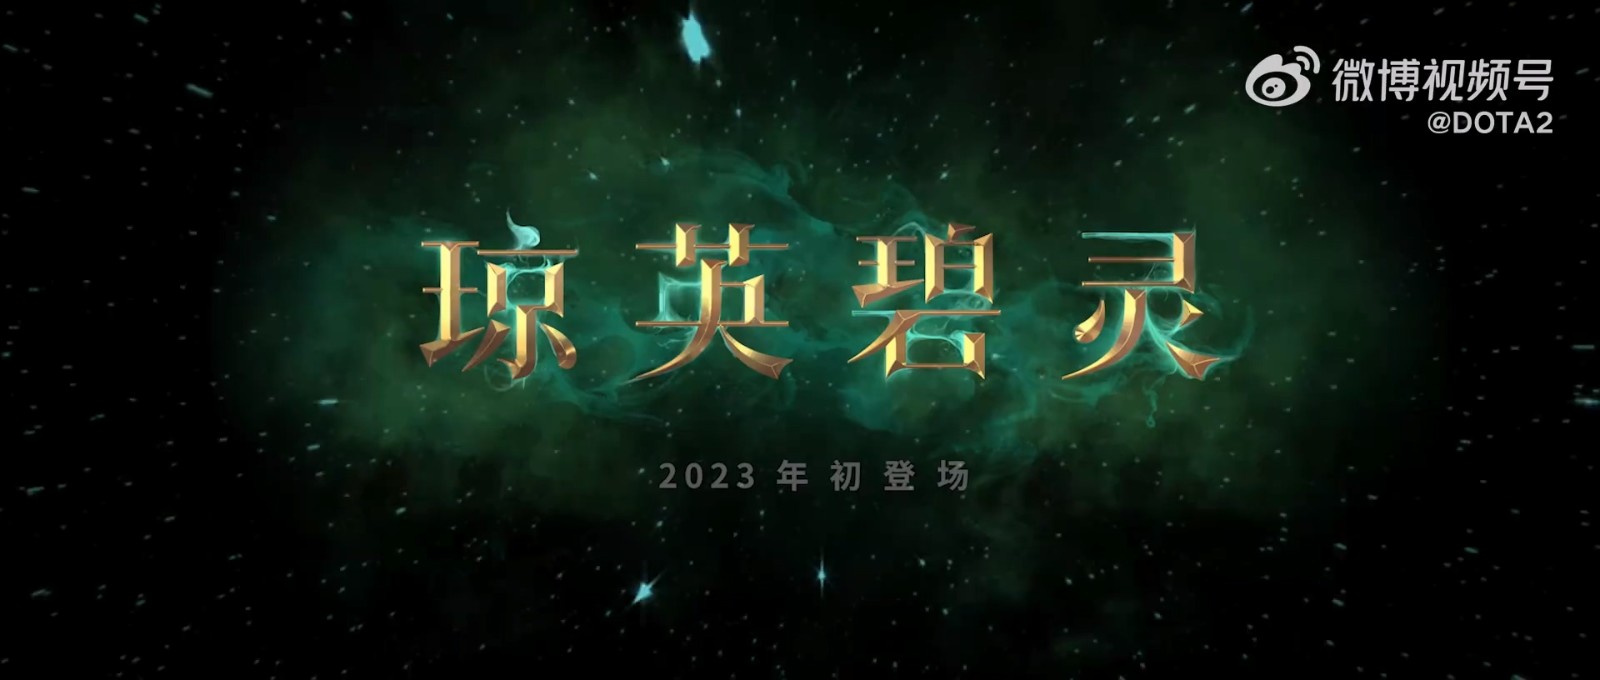 《DOTA2》新英雄瓊英碧靈公布 2023年上線